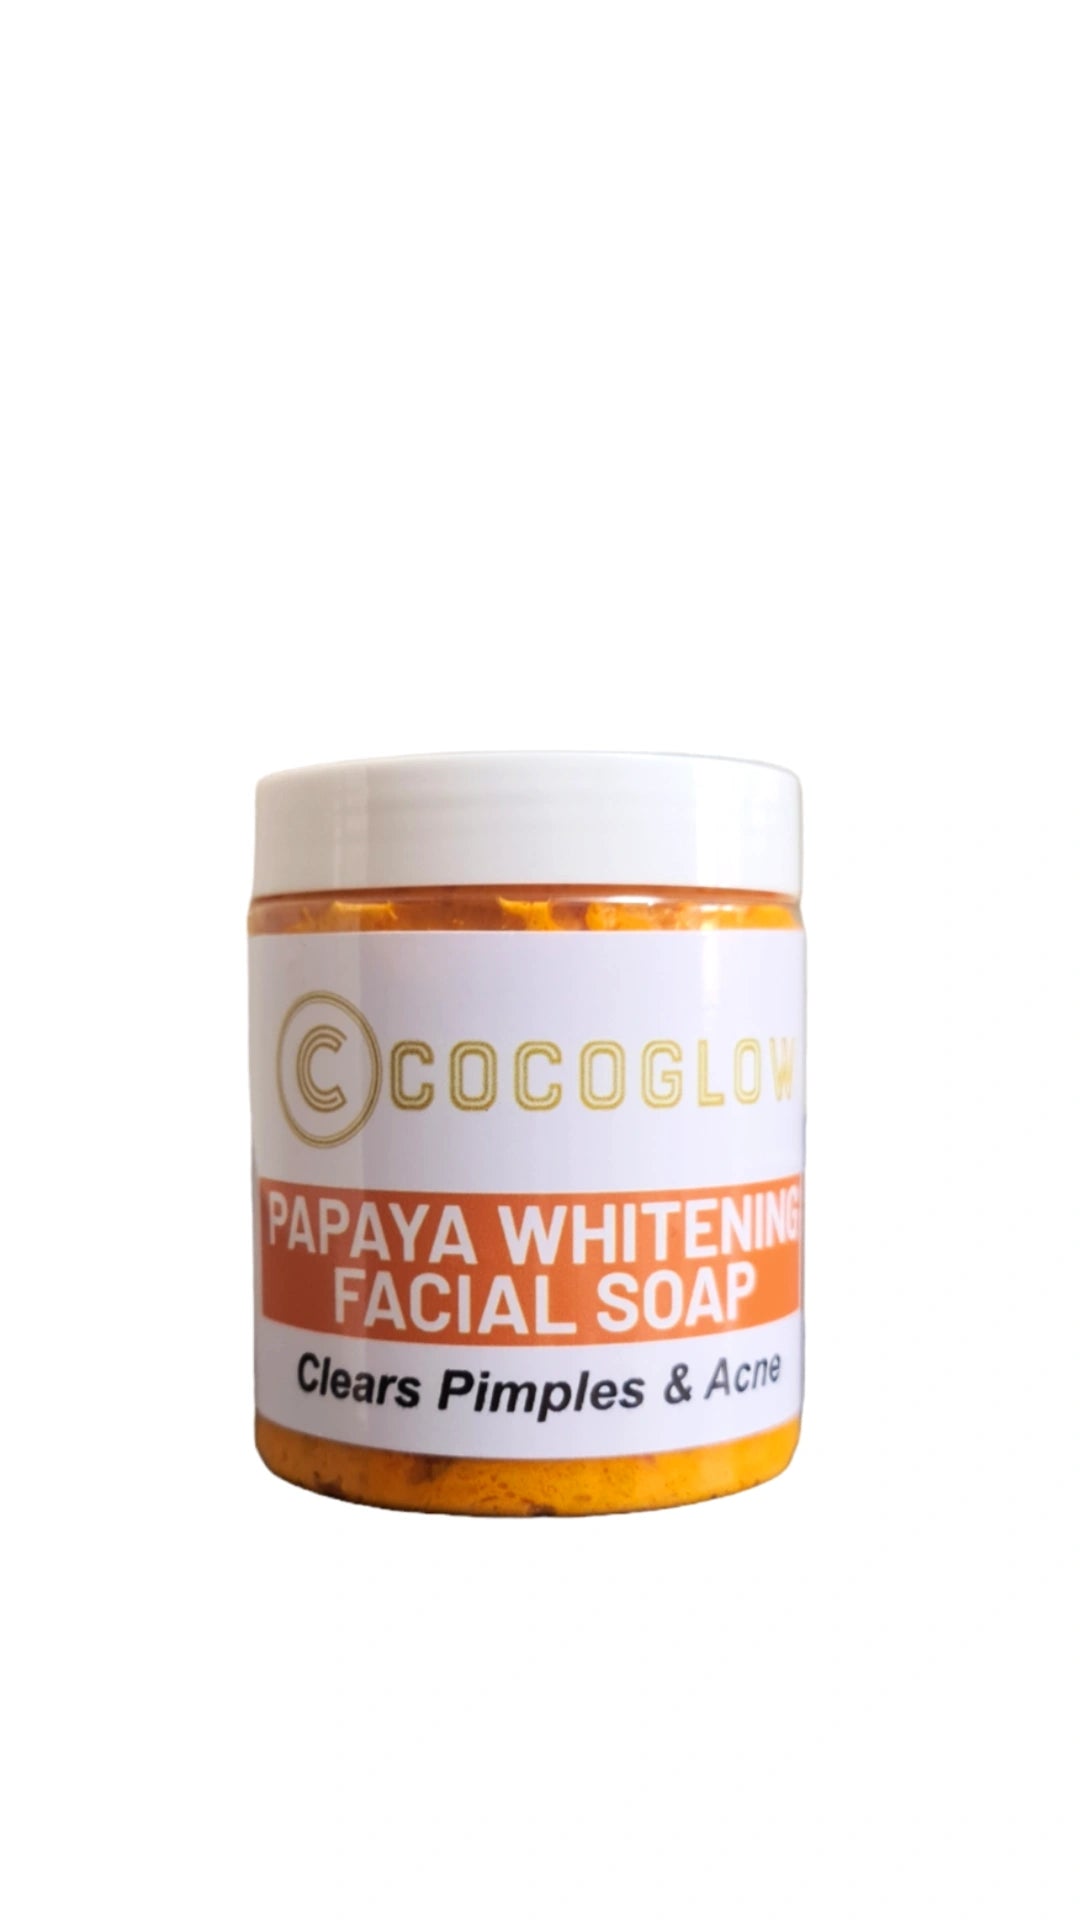 Papaya whitening facial soap